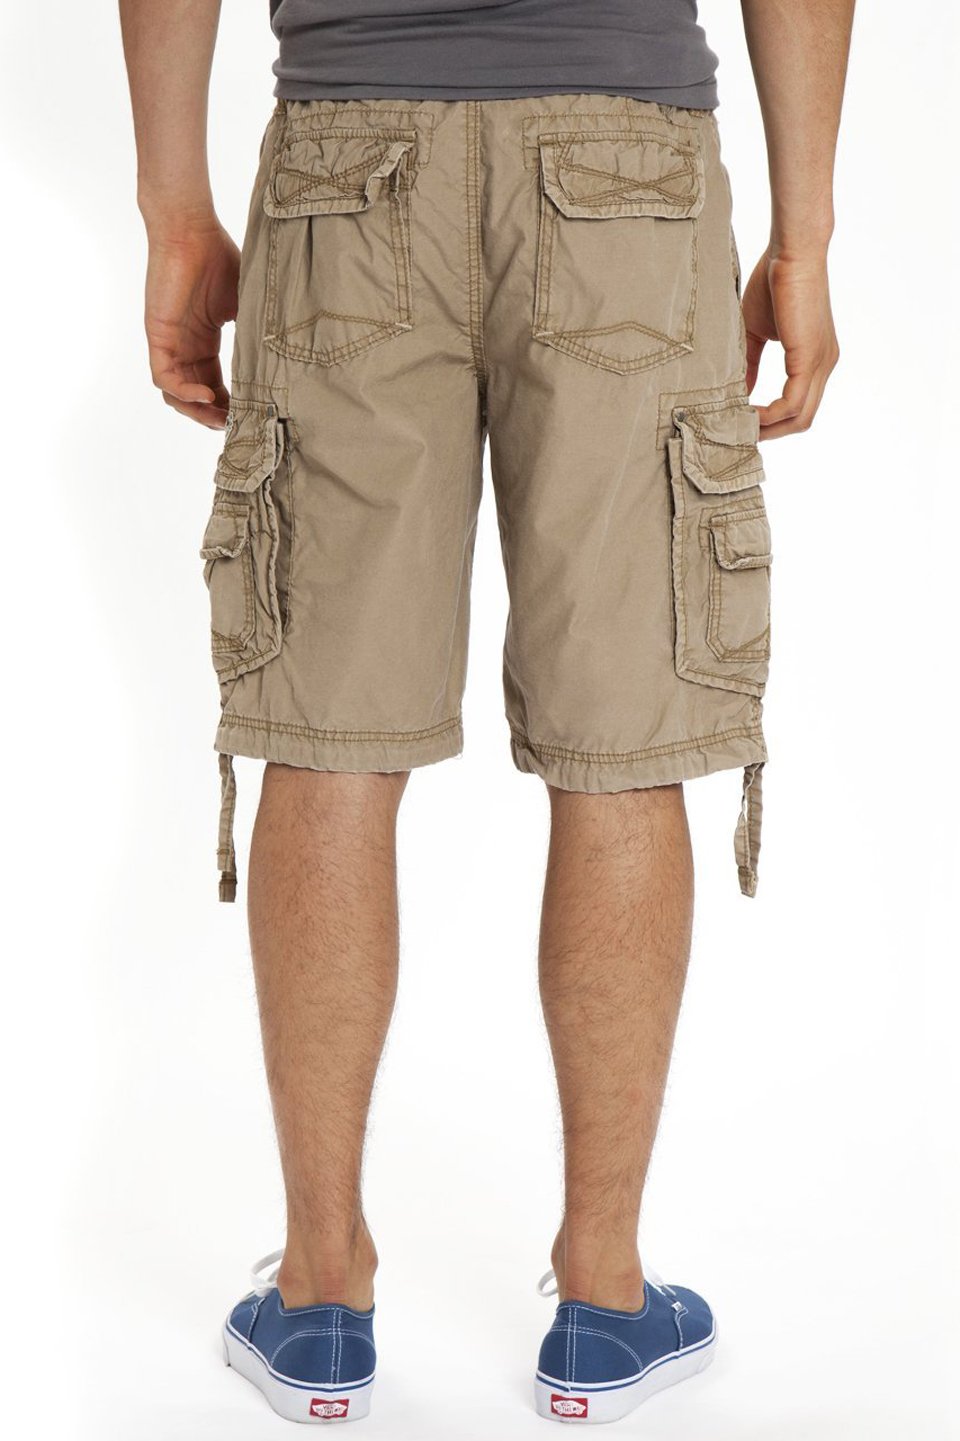 cuffed shorts mens